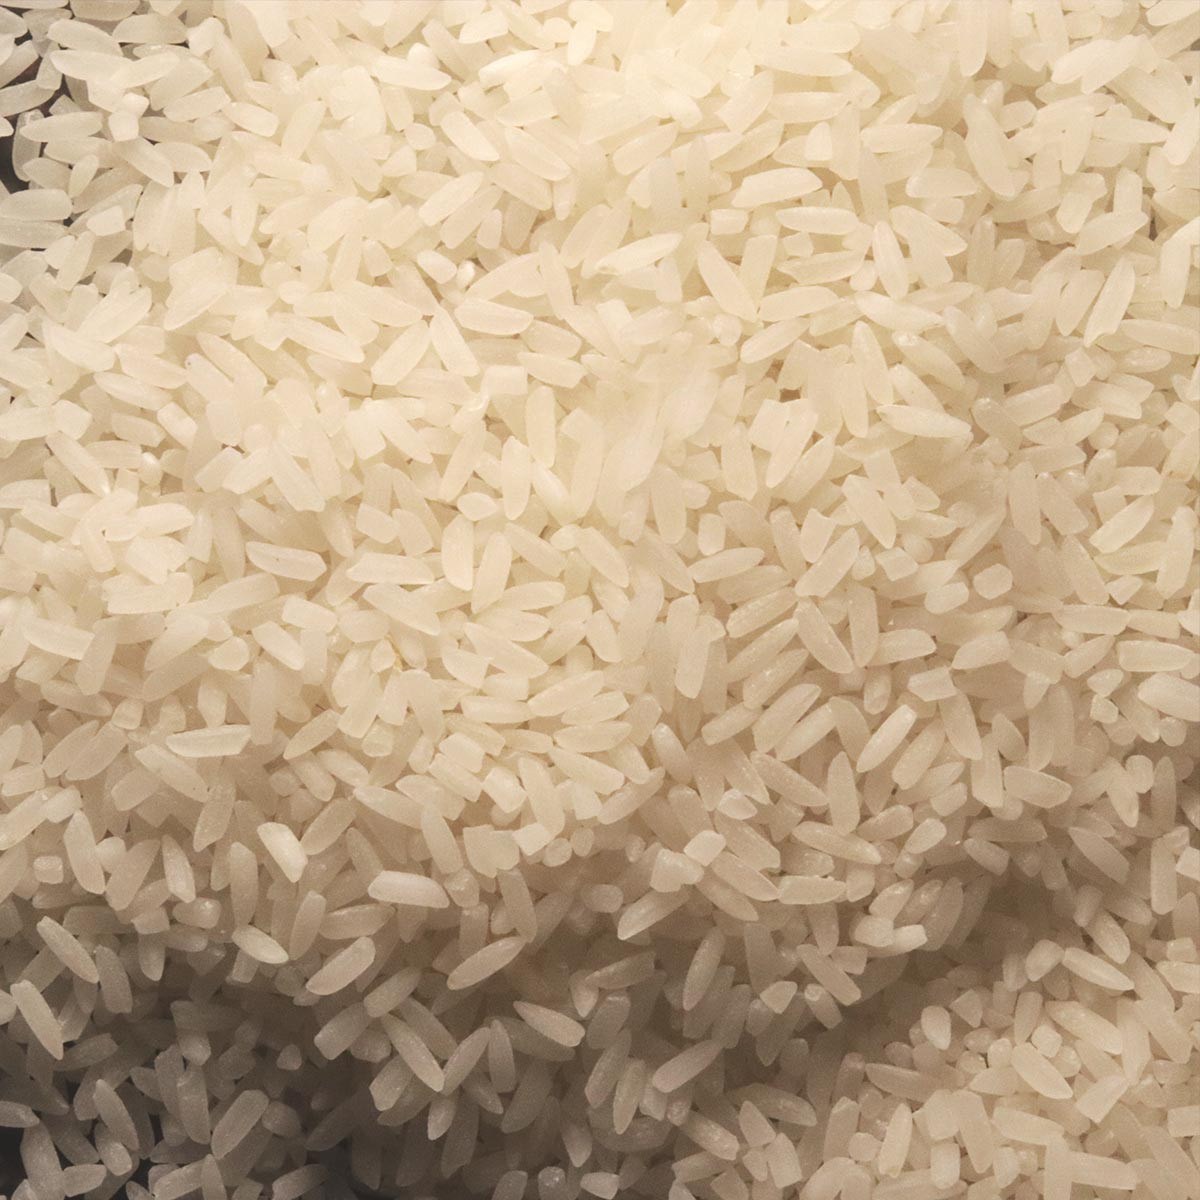 Tulaipanji Rice Parboiled/Atap (2kgs)- Chemical-free Aromatic Rice